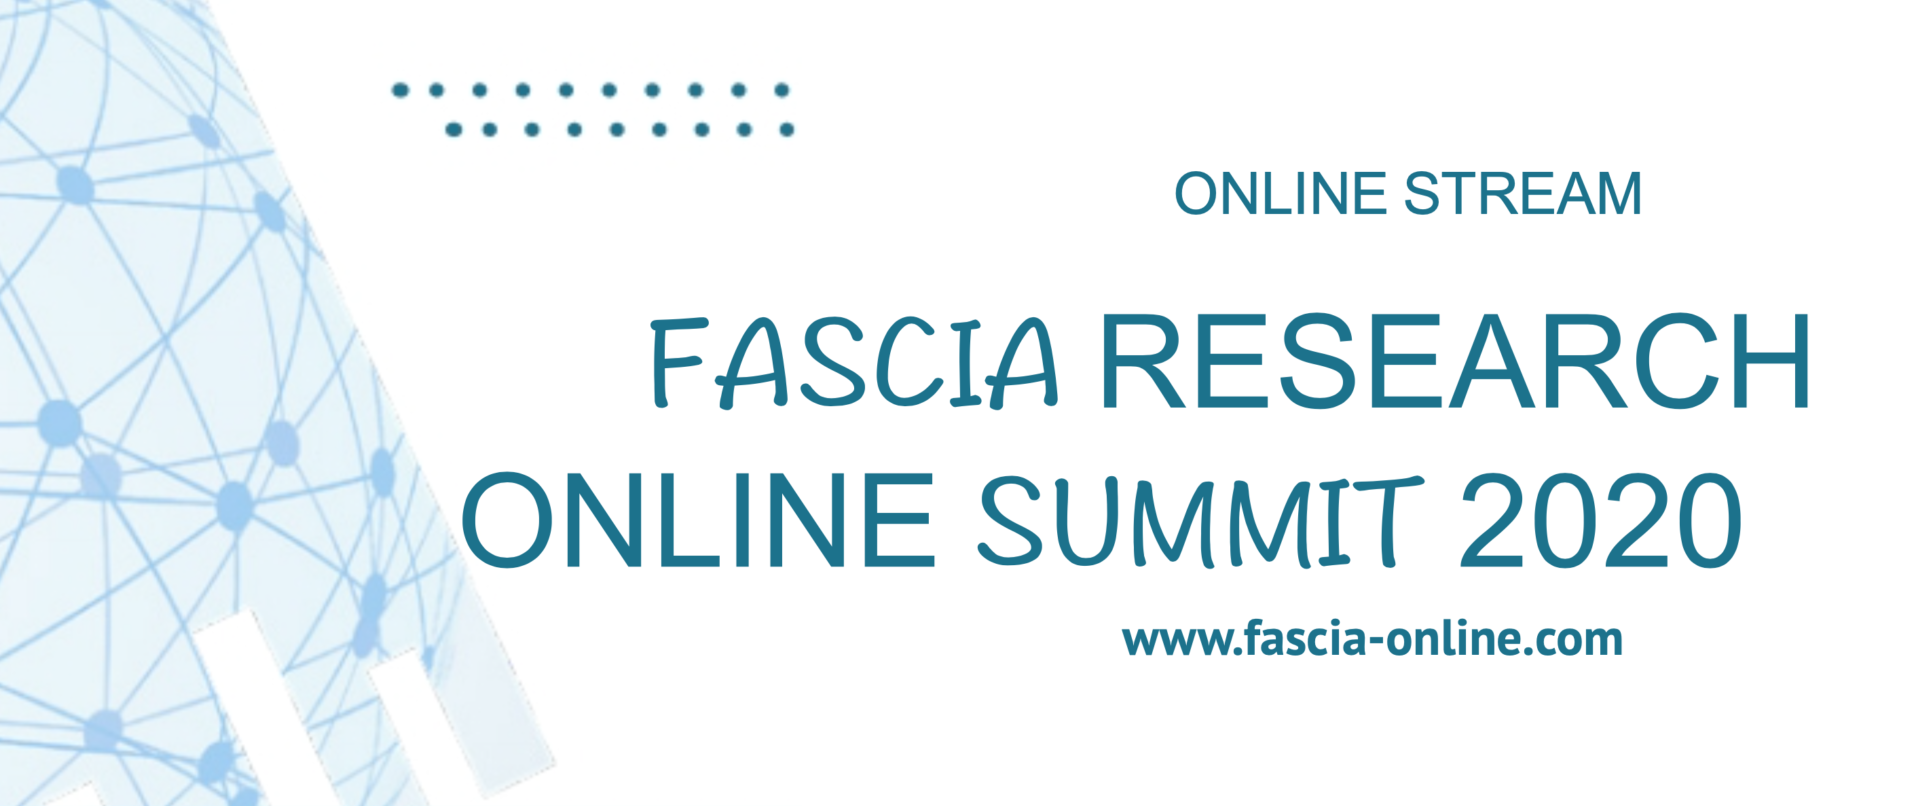 Fascia Research Online Summit 2020